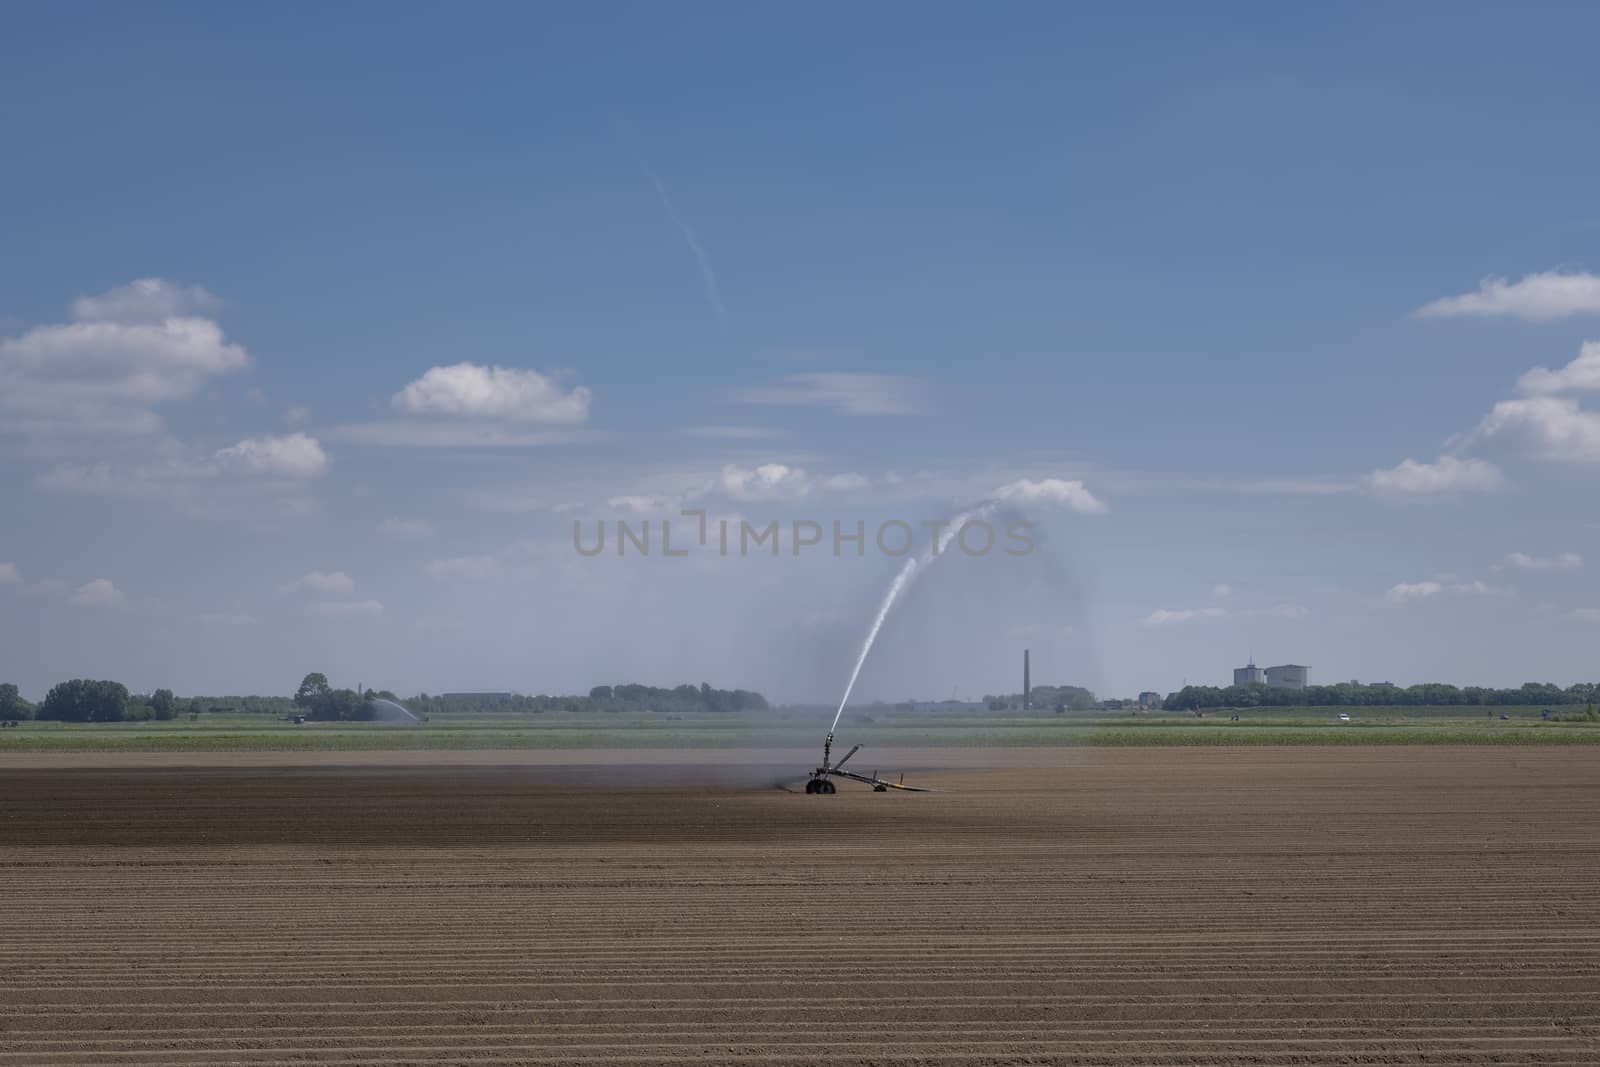 Watering system in a field. An irrigation pivot watering a field